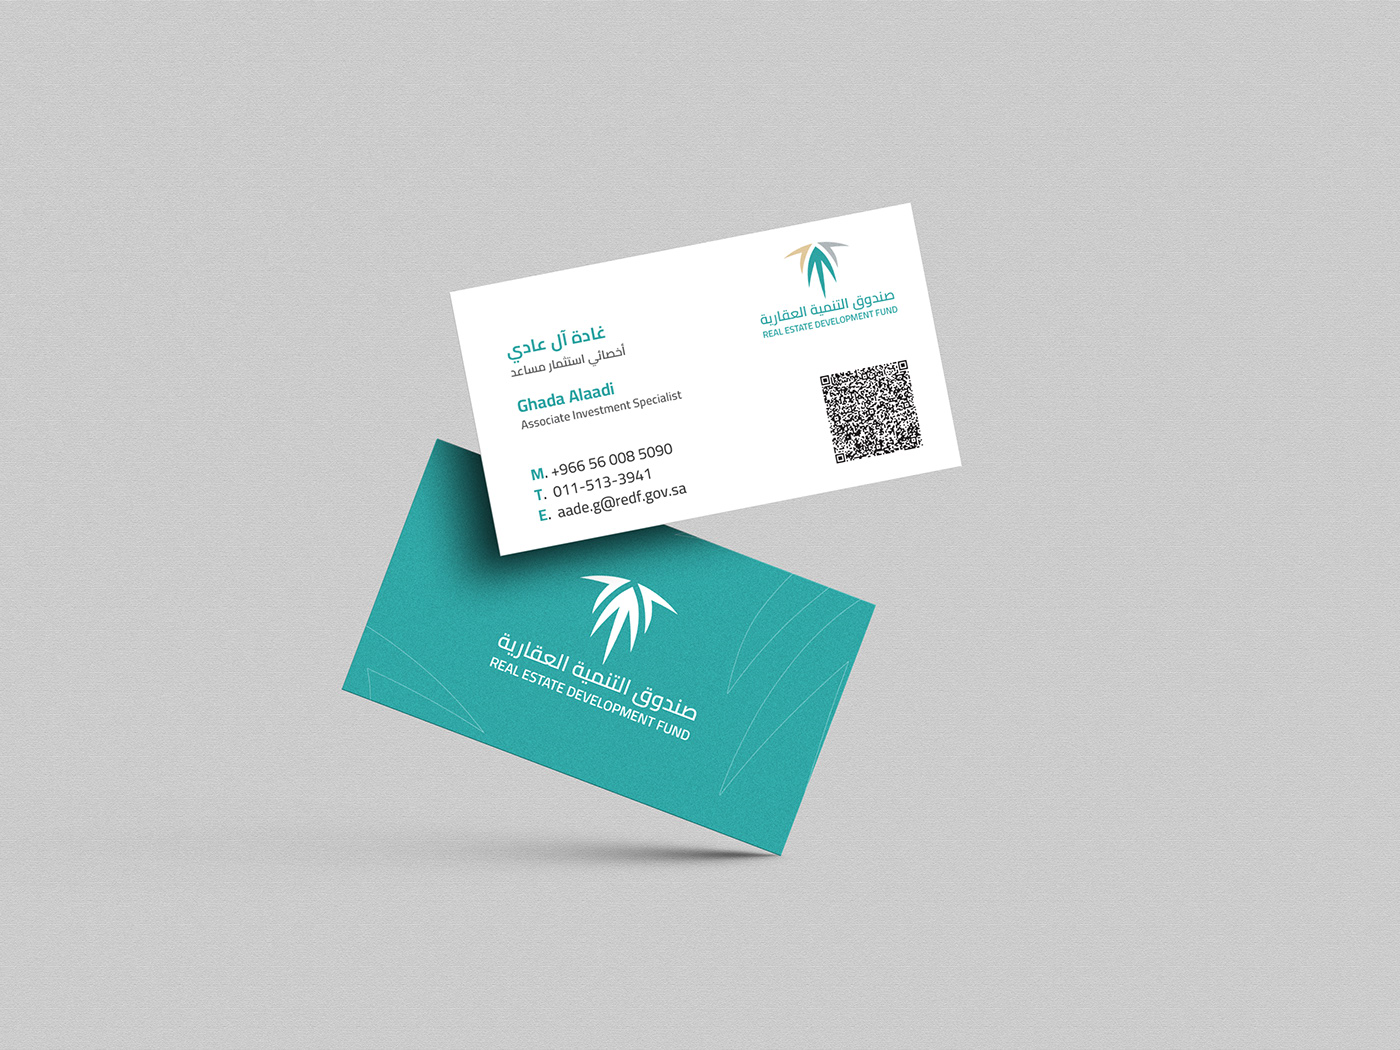 design brand identity buisness card graphic design  visual identity Brand Design adobe illustrator